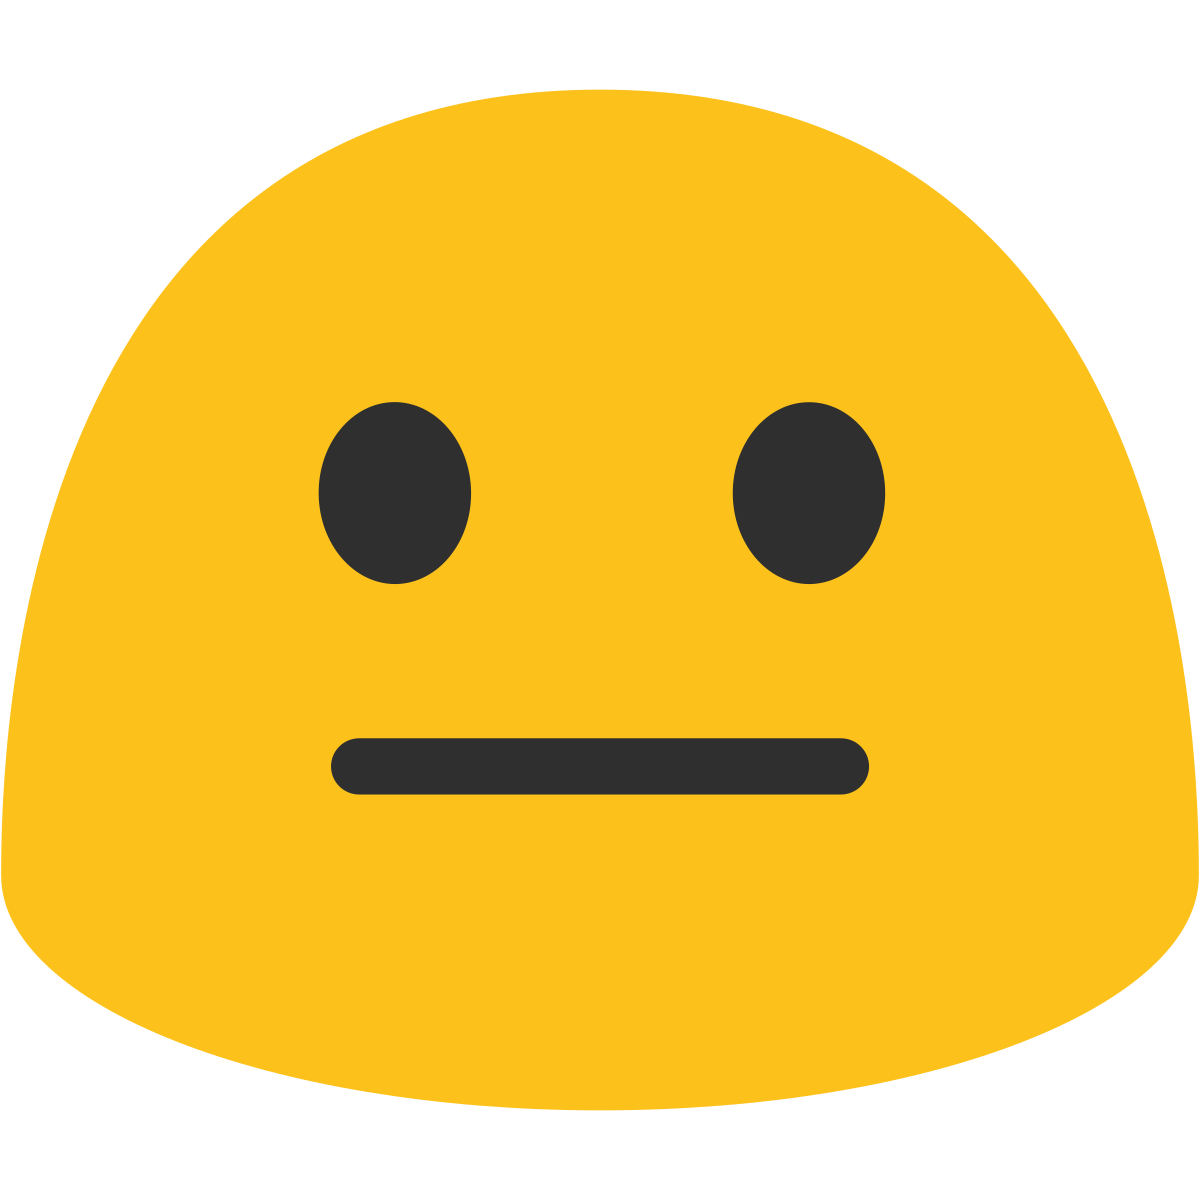 Emoji Logo PNG HD Quality